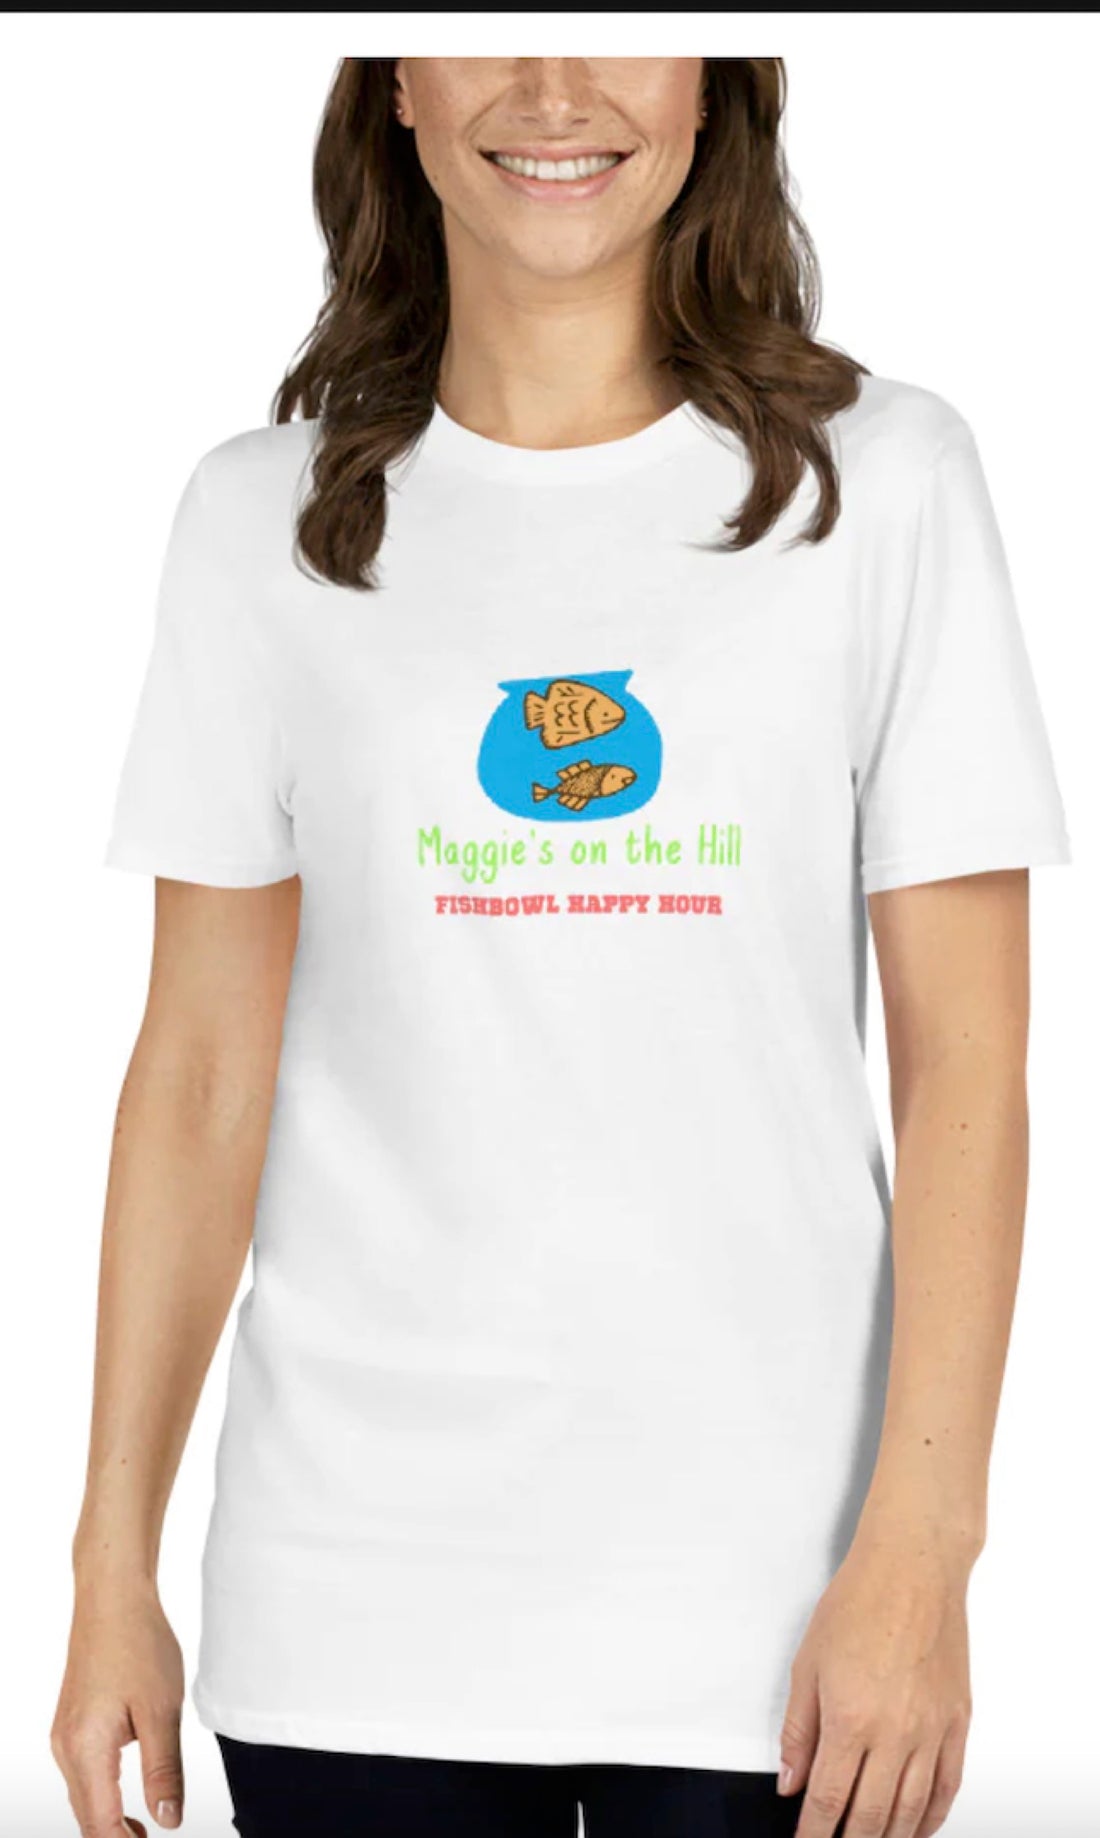 White Graphic College Bar Tee Shirt "Fishbowl Happy Hour"